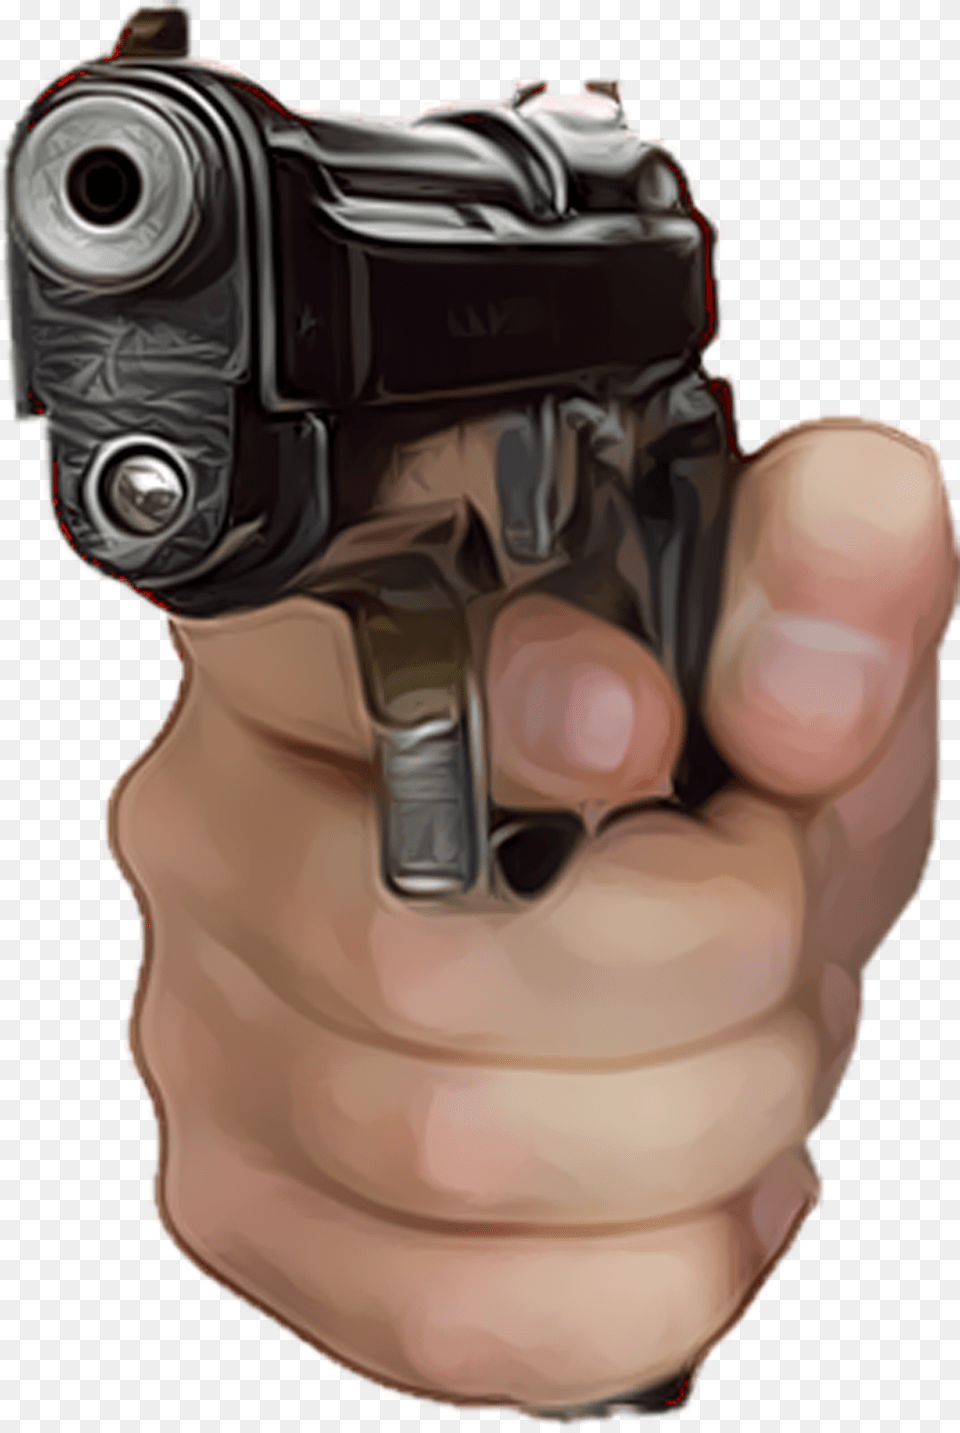 Pointing Gun Hand Gun, Firearm, Handgun, Weapon Png